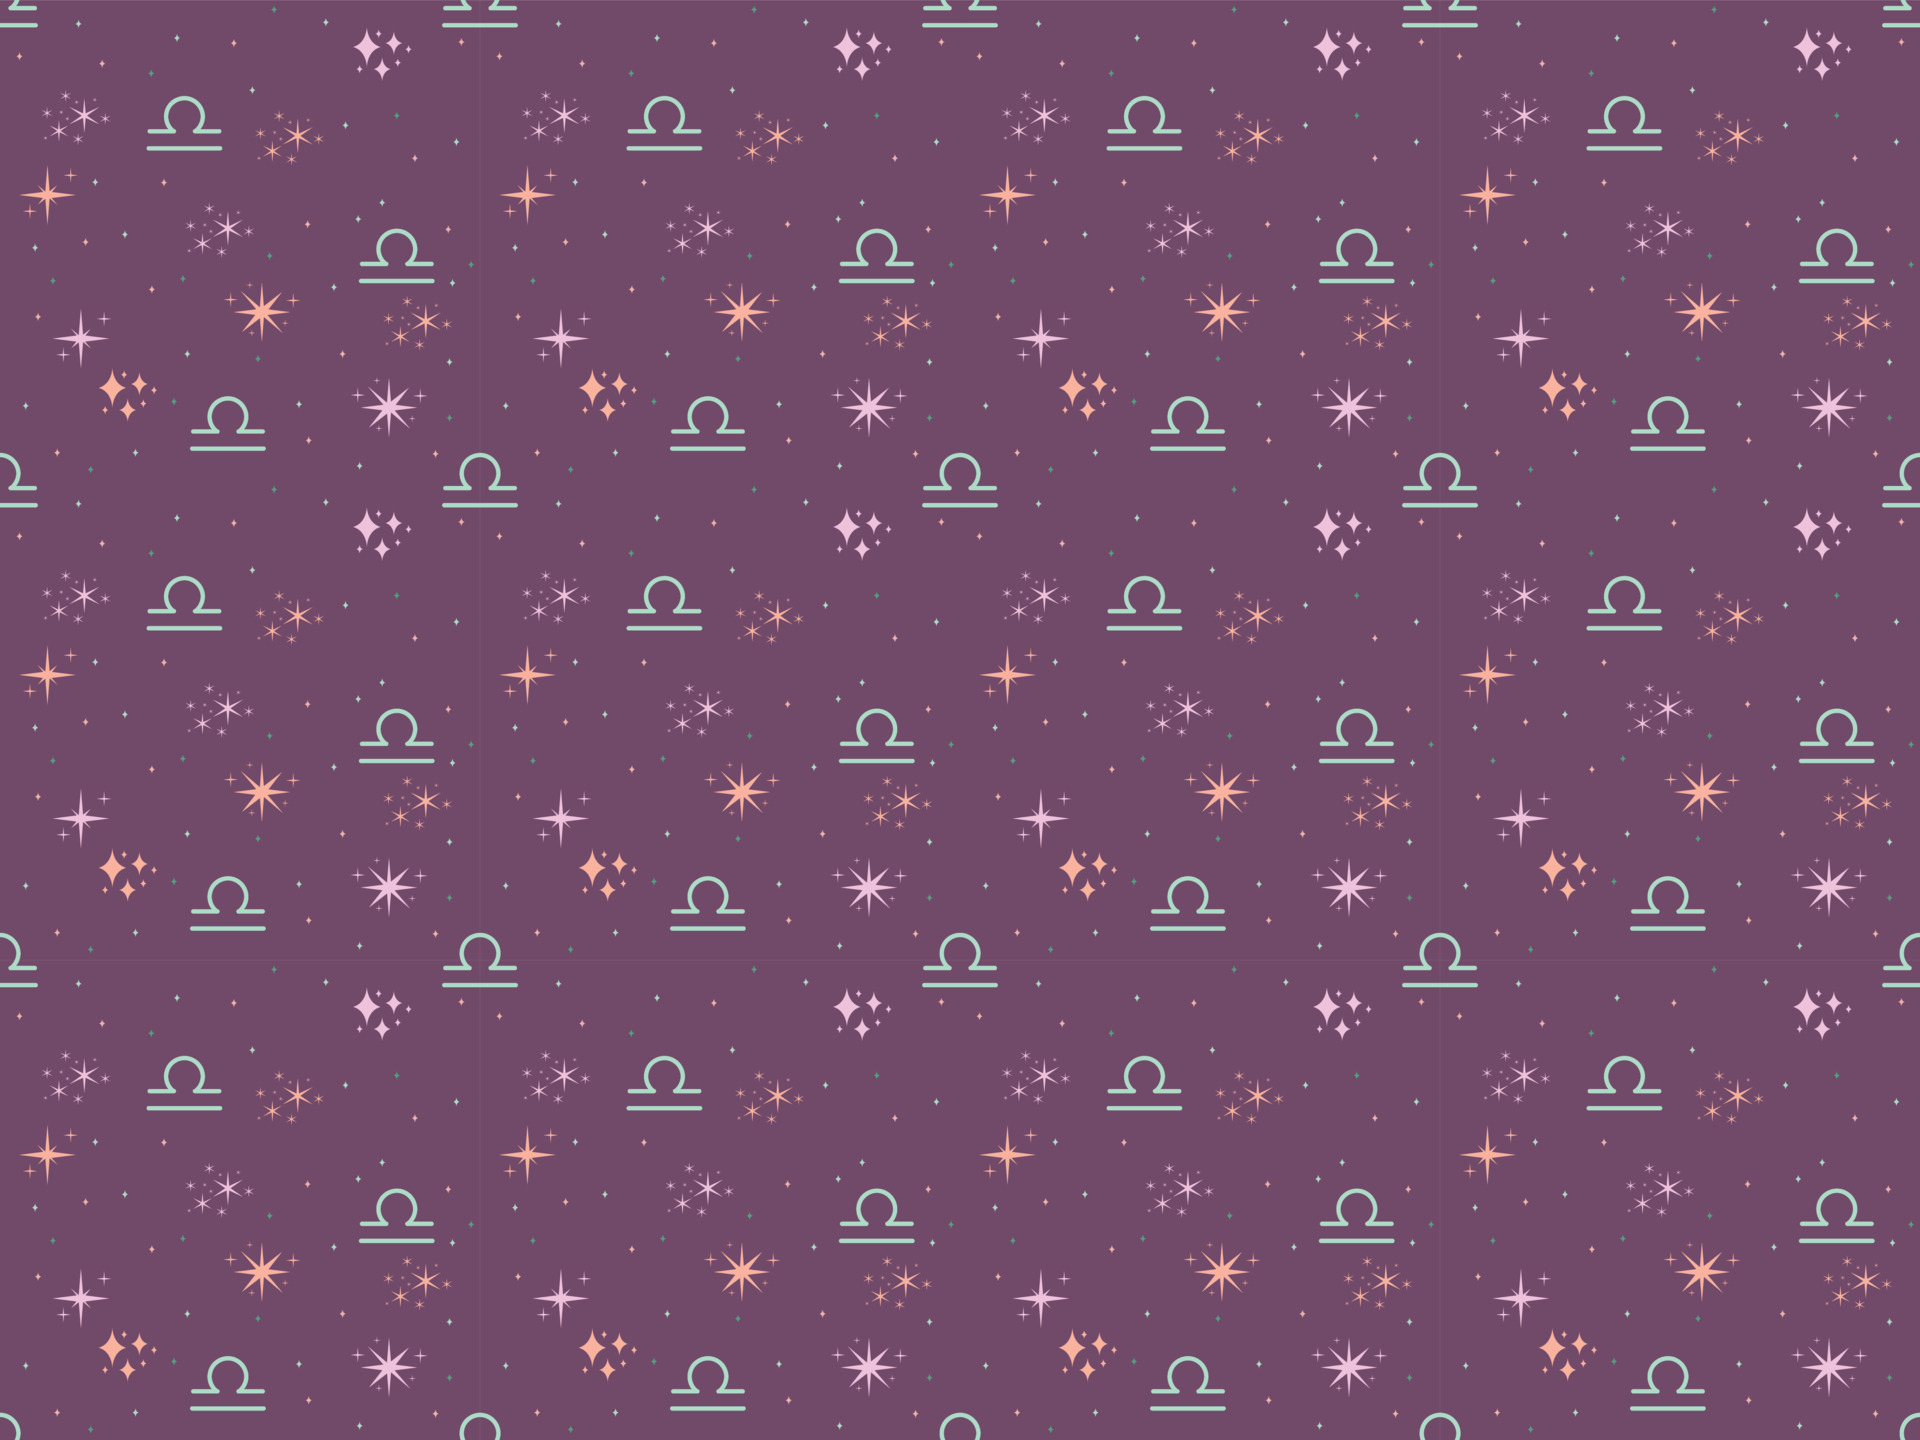 Zodiac  Scorpio  Fantasy  Abstract Background Wallpapers on Desktop  Nexus Image 2532795